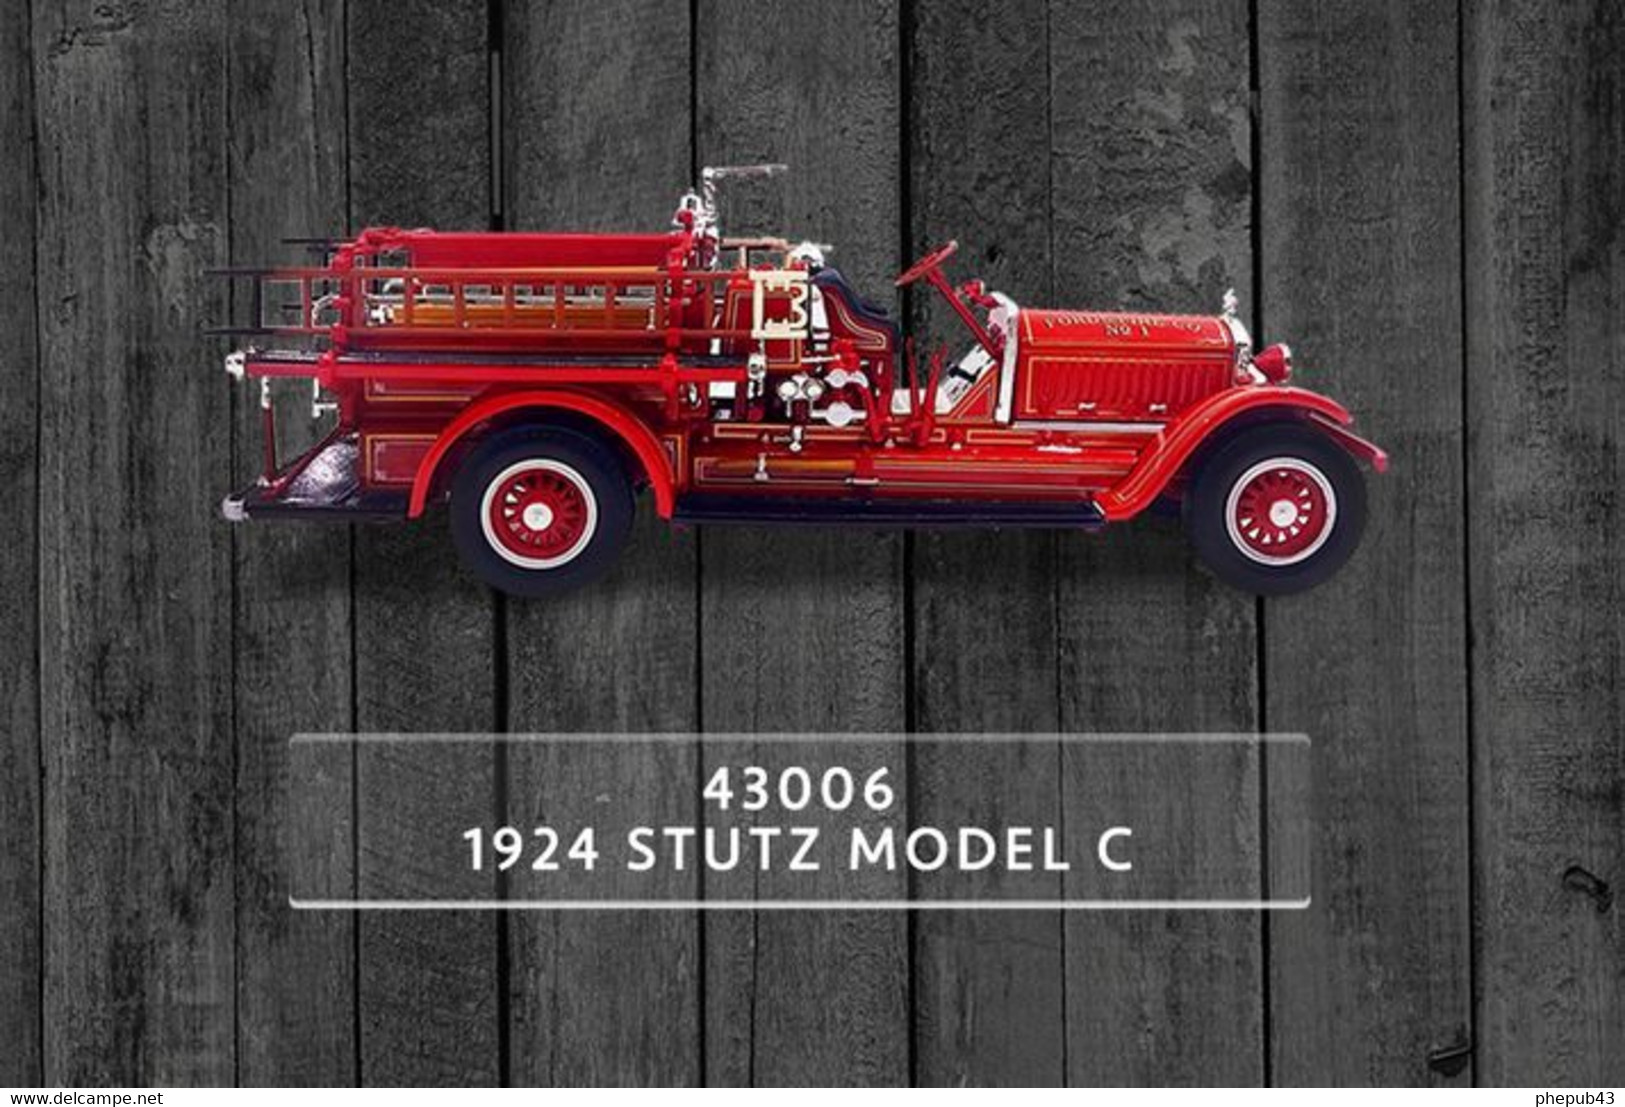 Stutz Model C - Ford Fire Co - 1924 - Lucky Die Cast - LKW